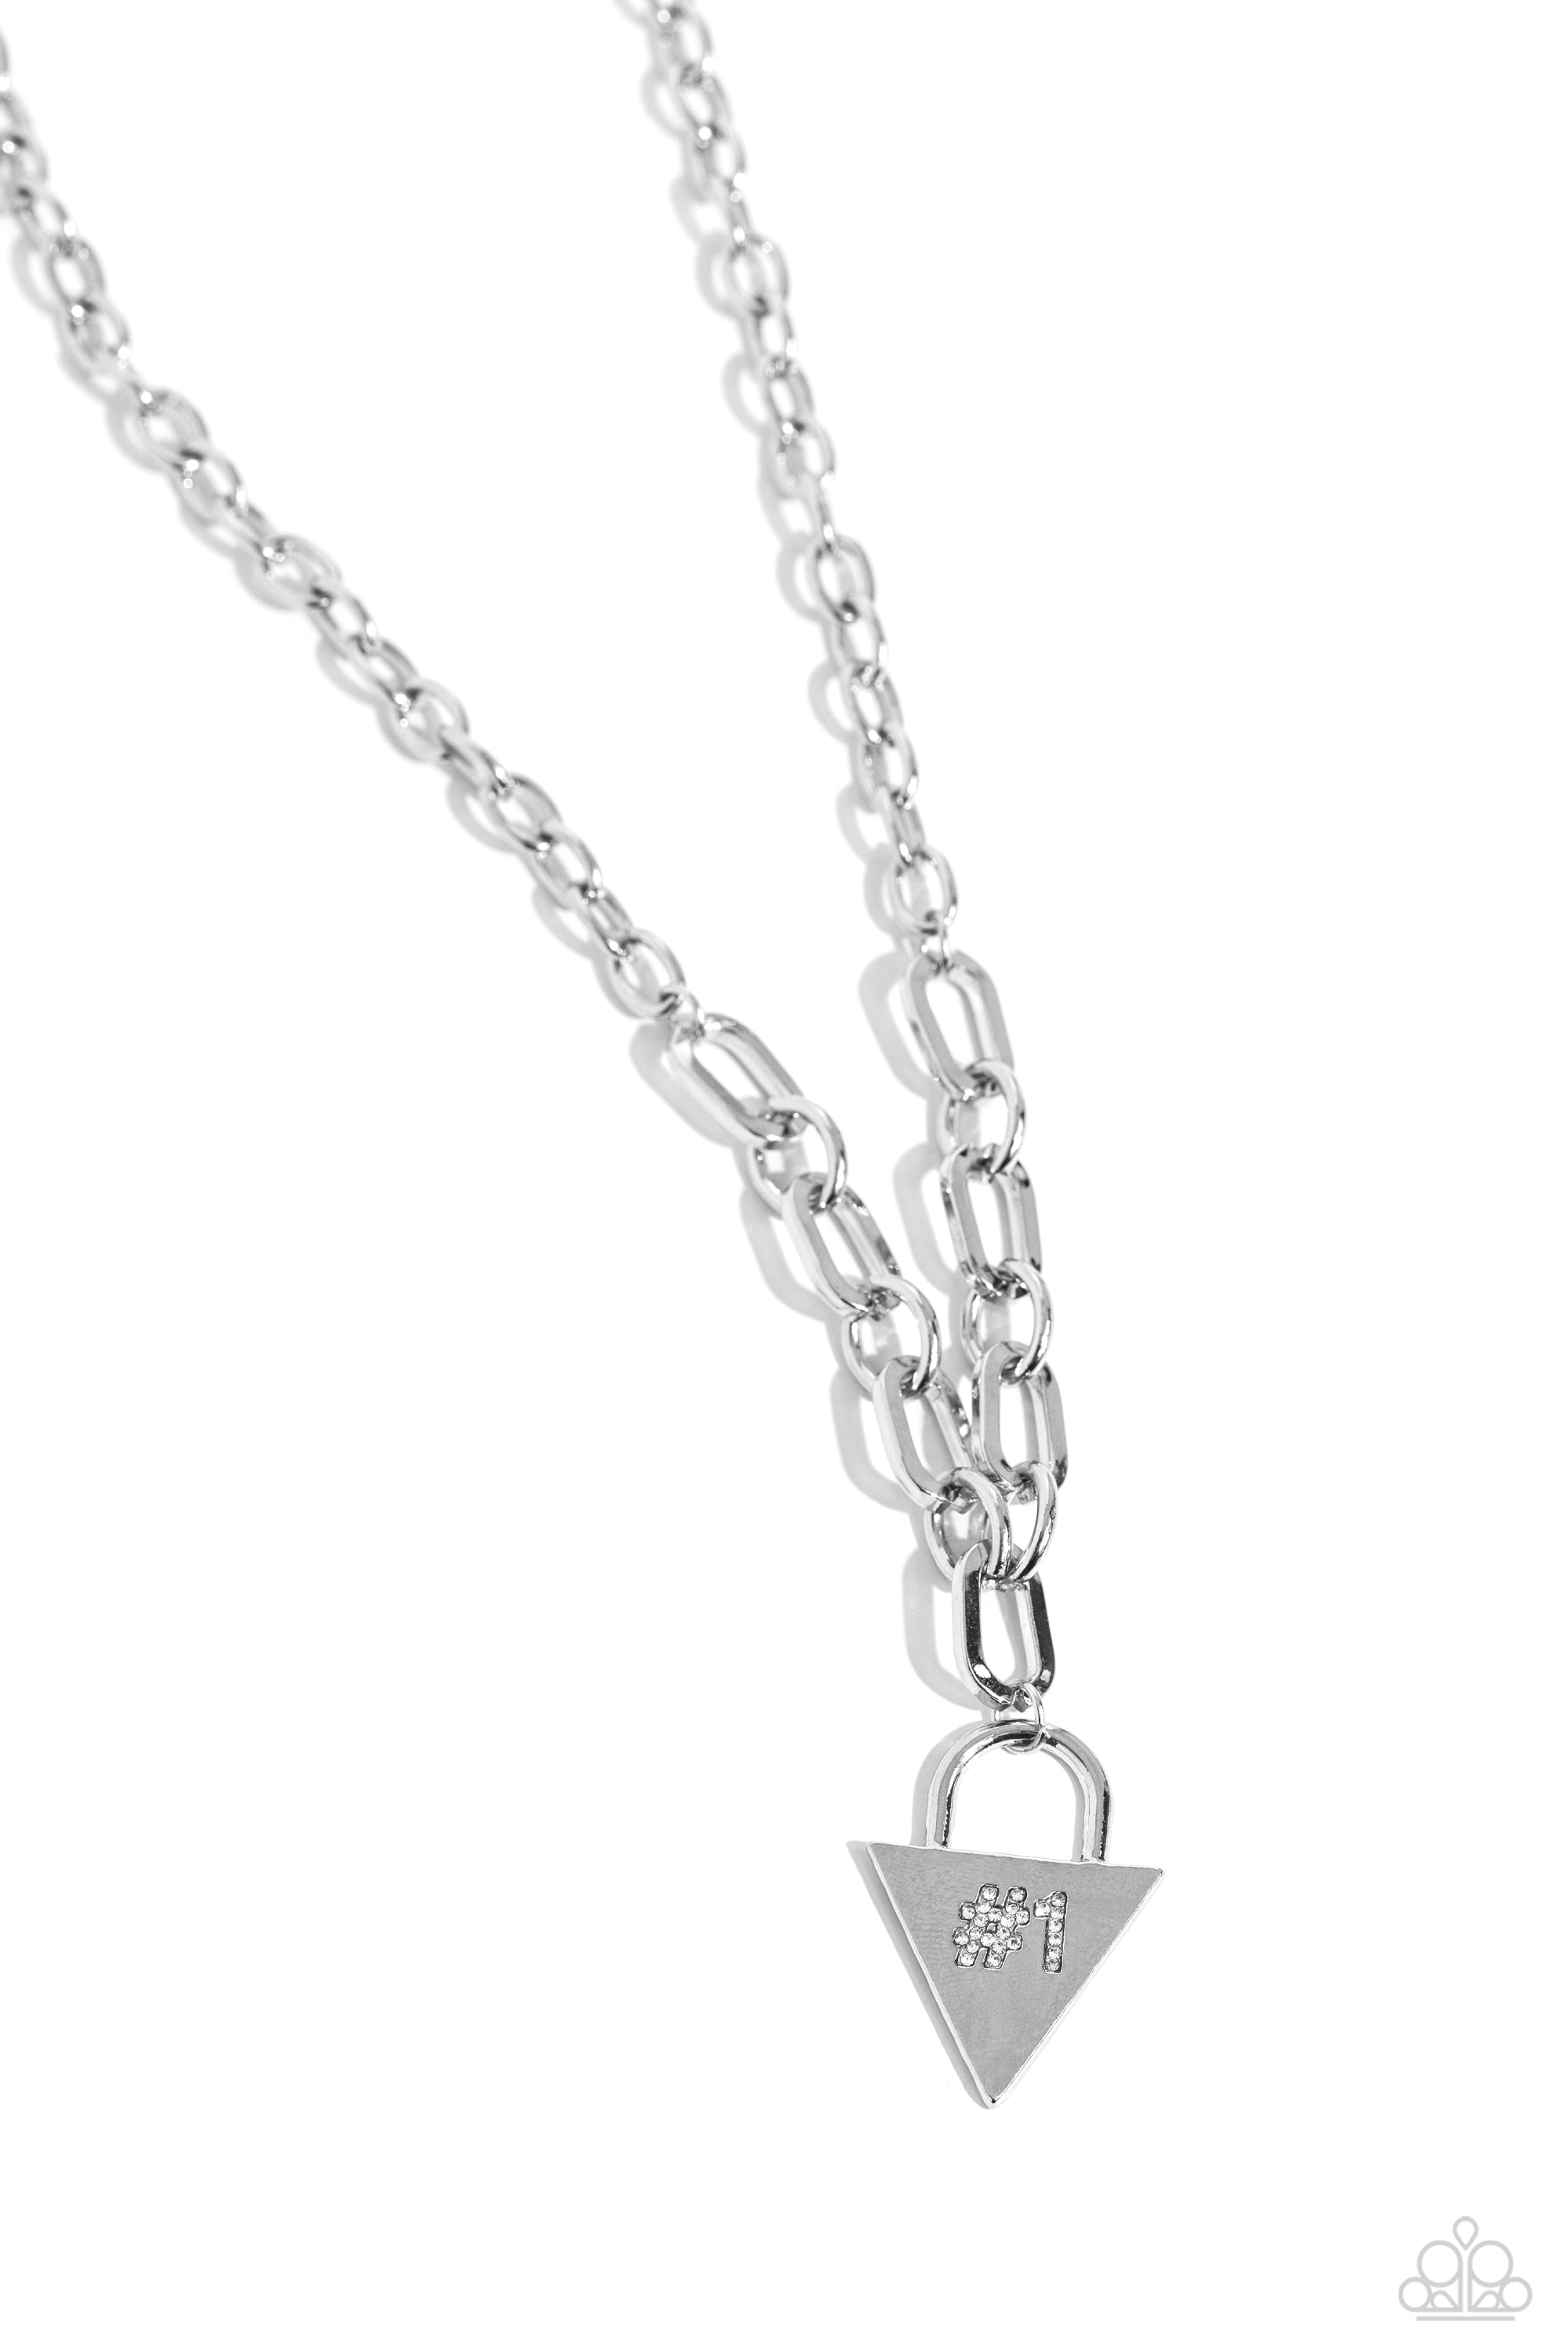 Rock Star Sparkle White Necklace - Jewelry by Bretta